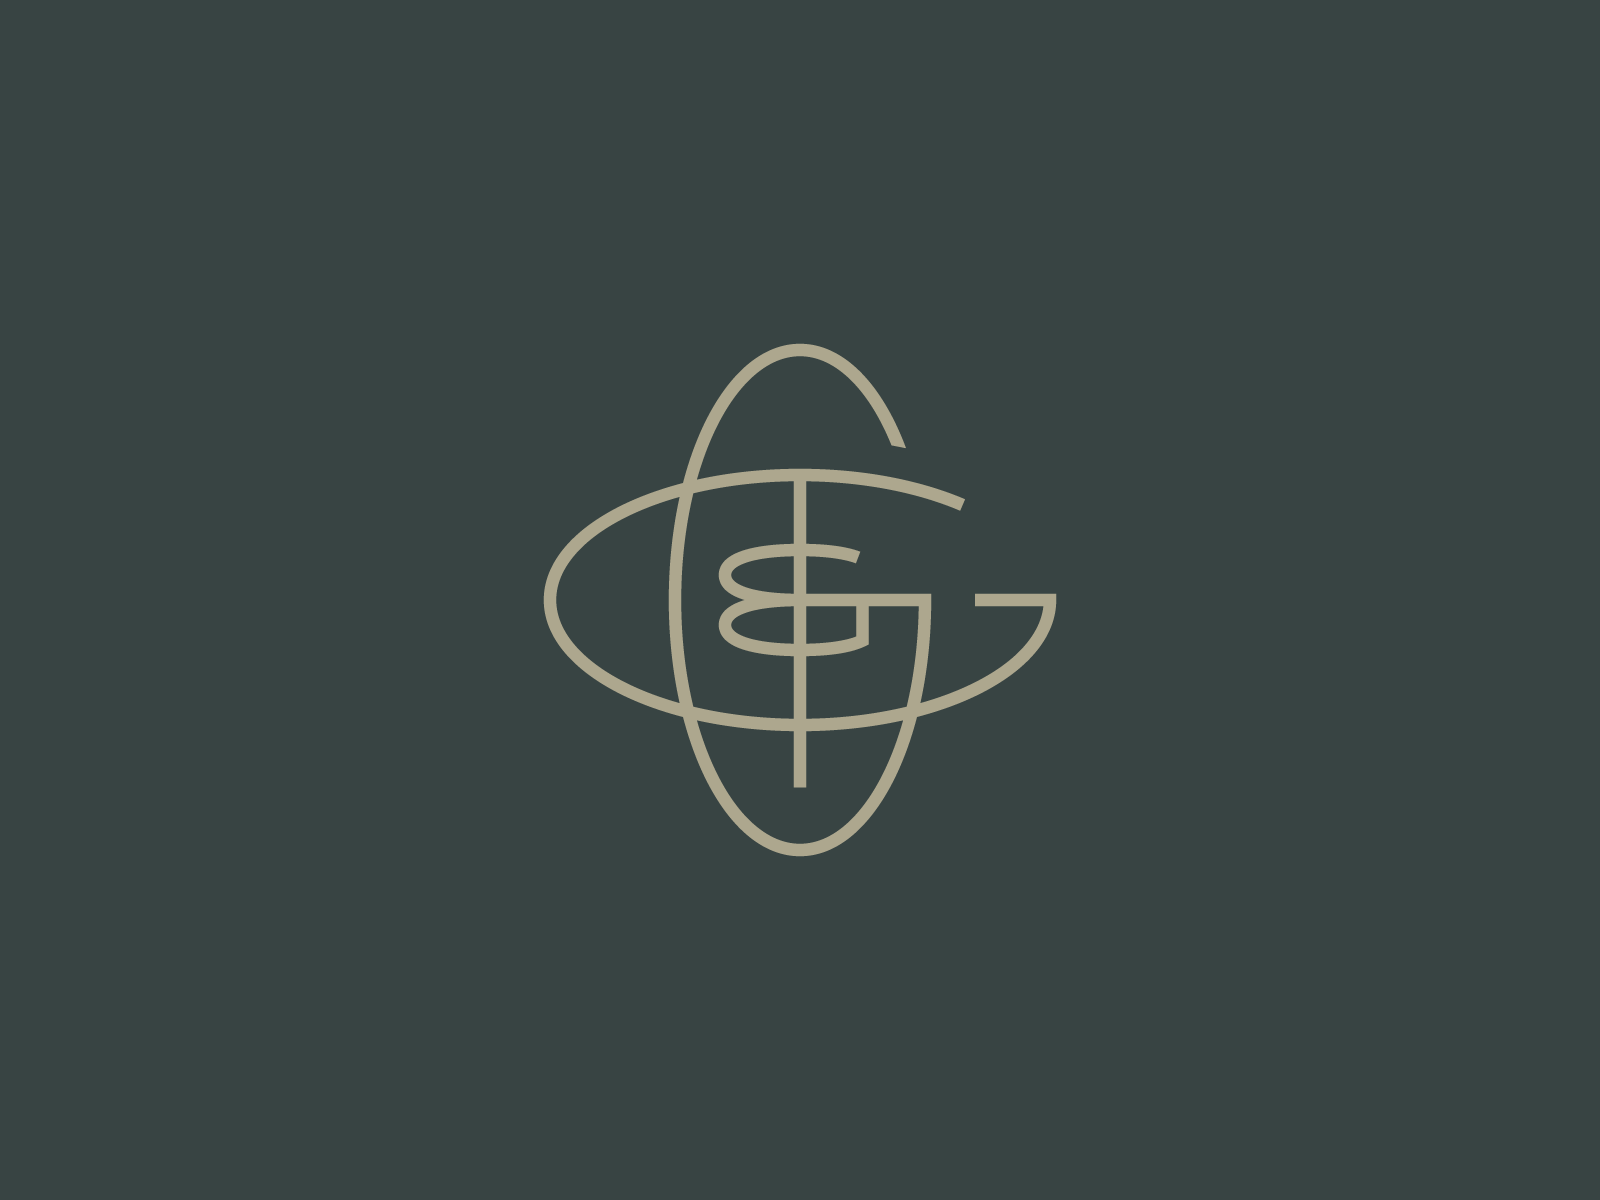 monogram gg